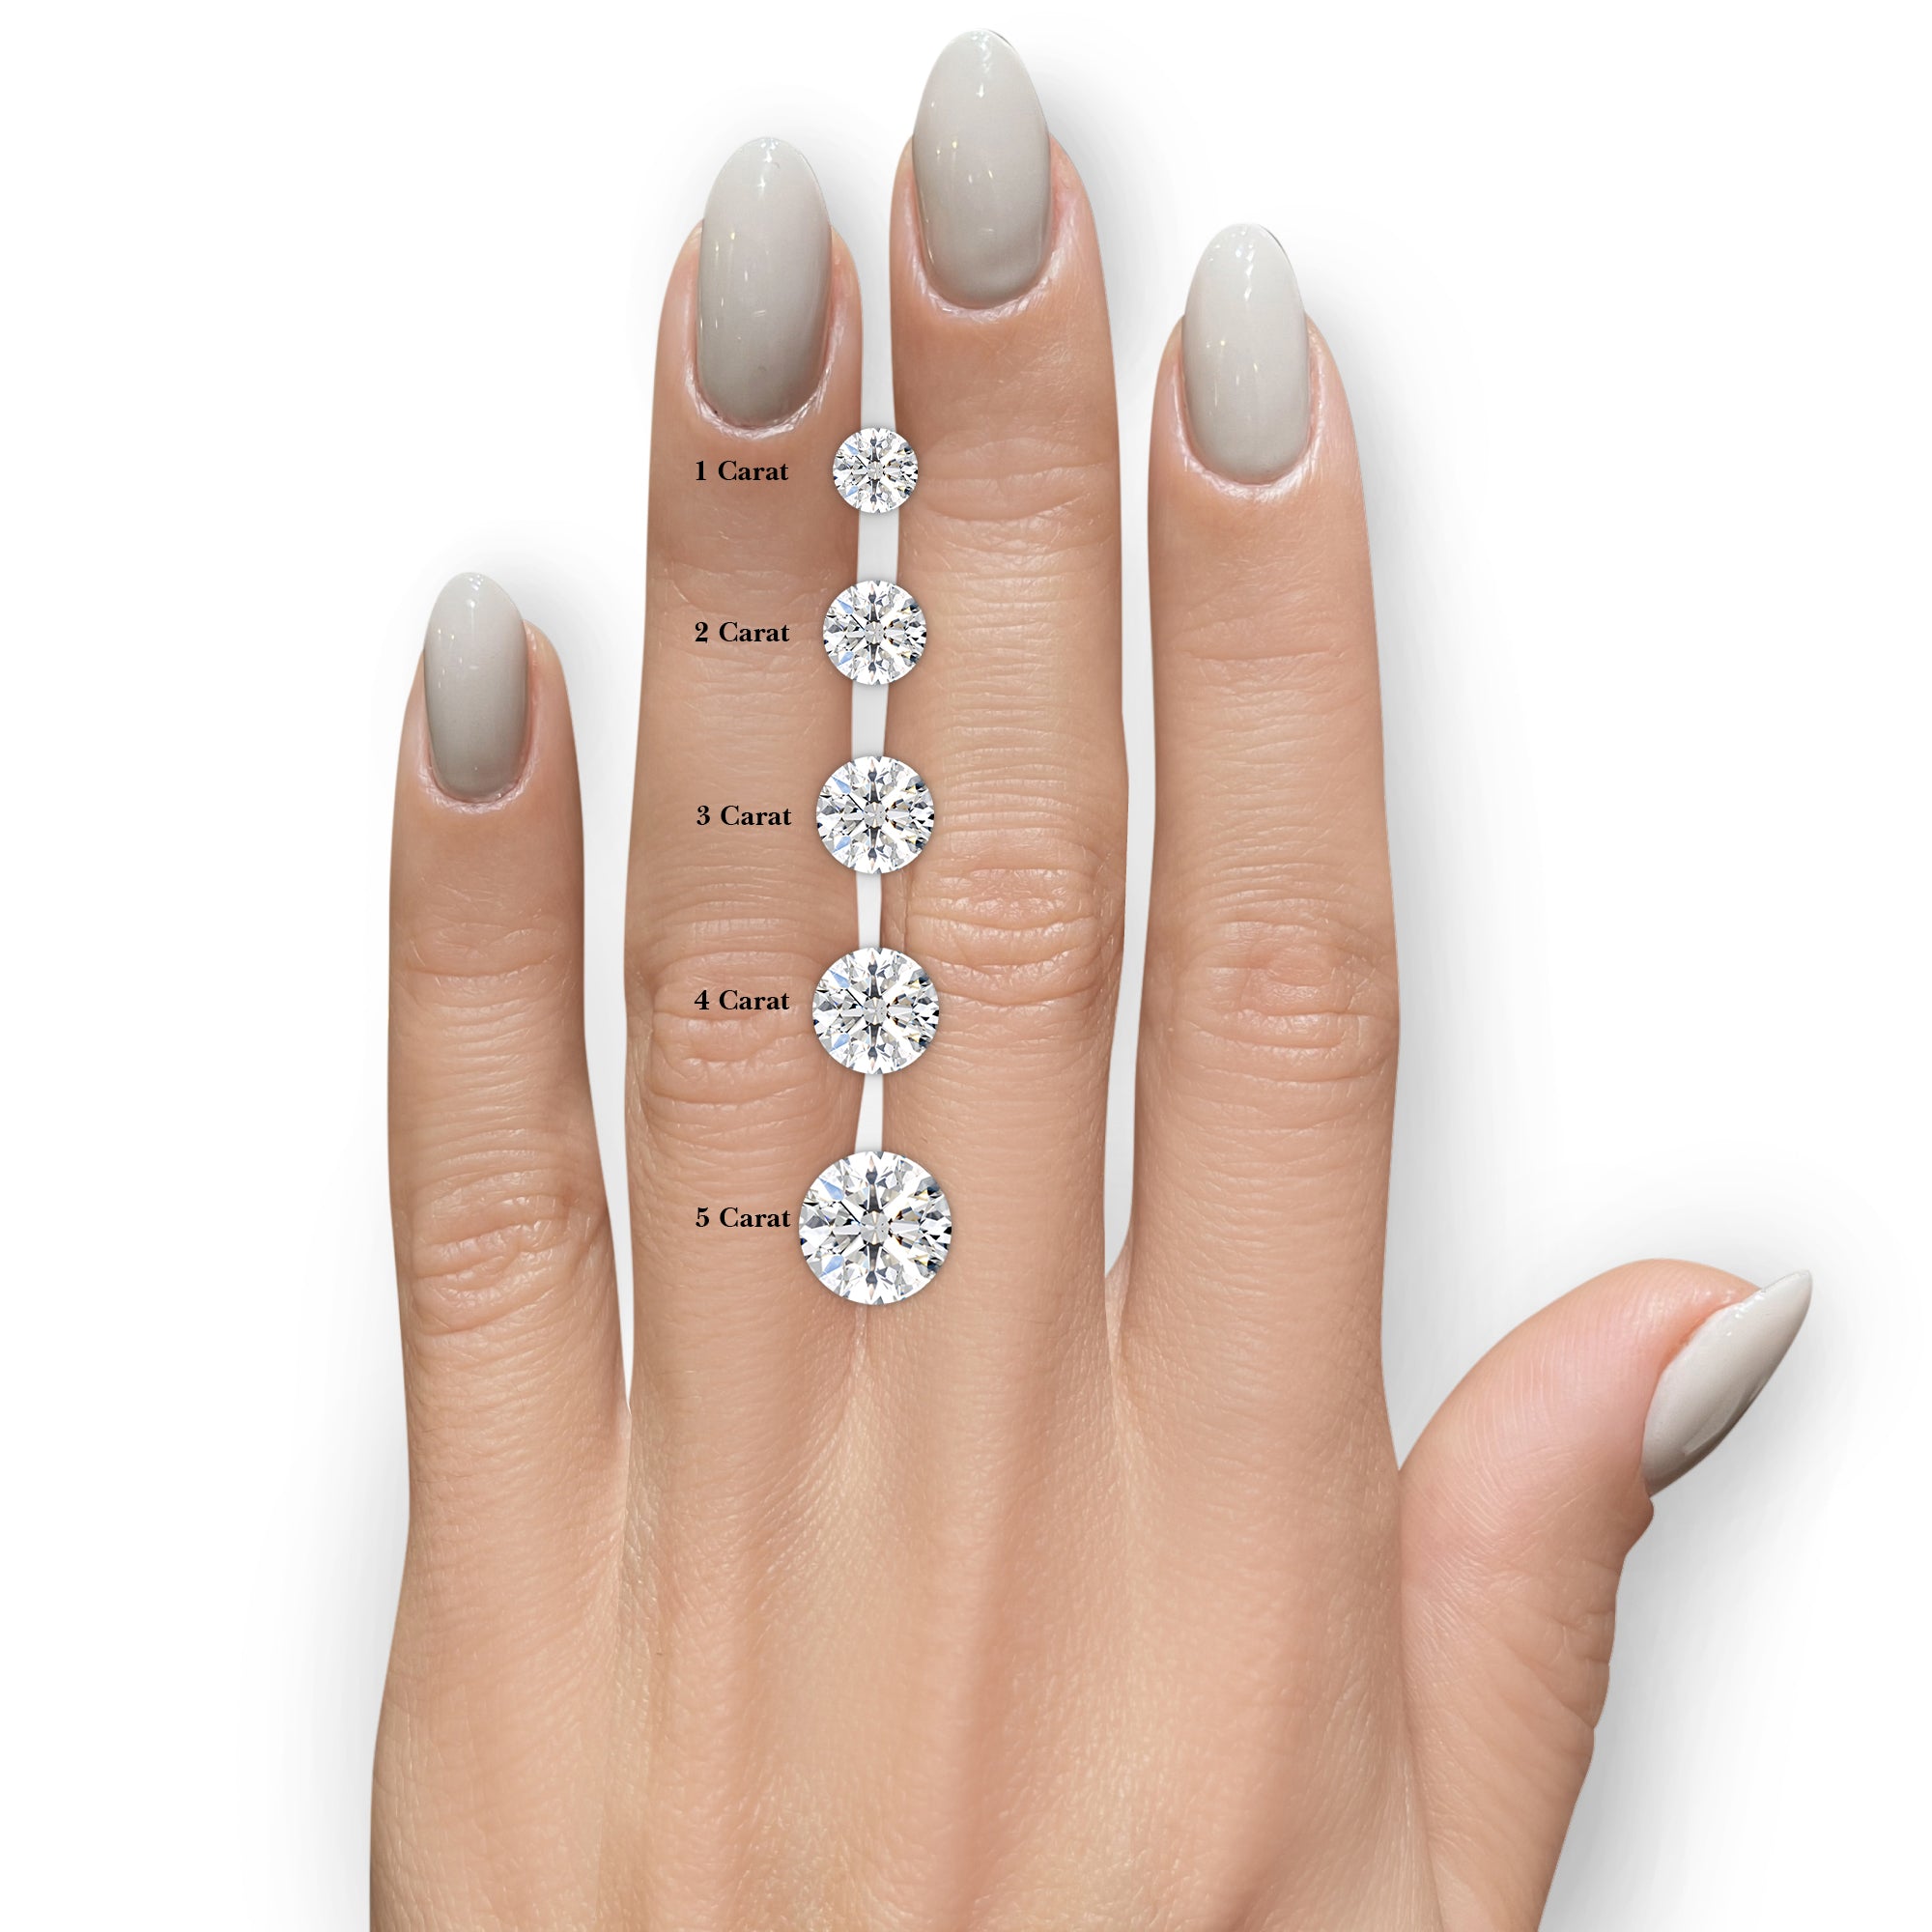 Cynthia Diamond Engagement Ring -14K White Gold